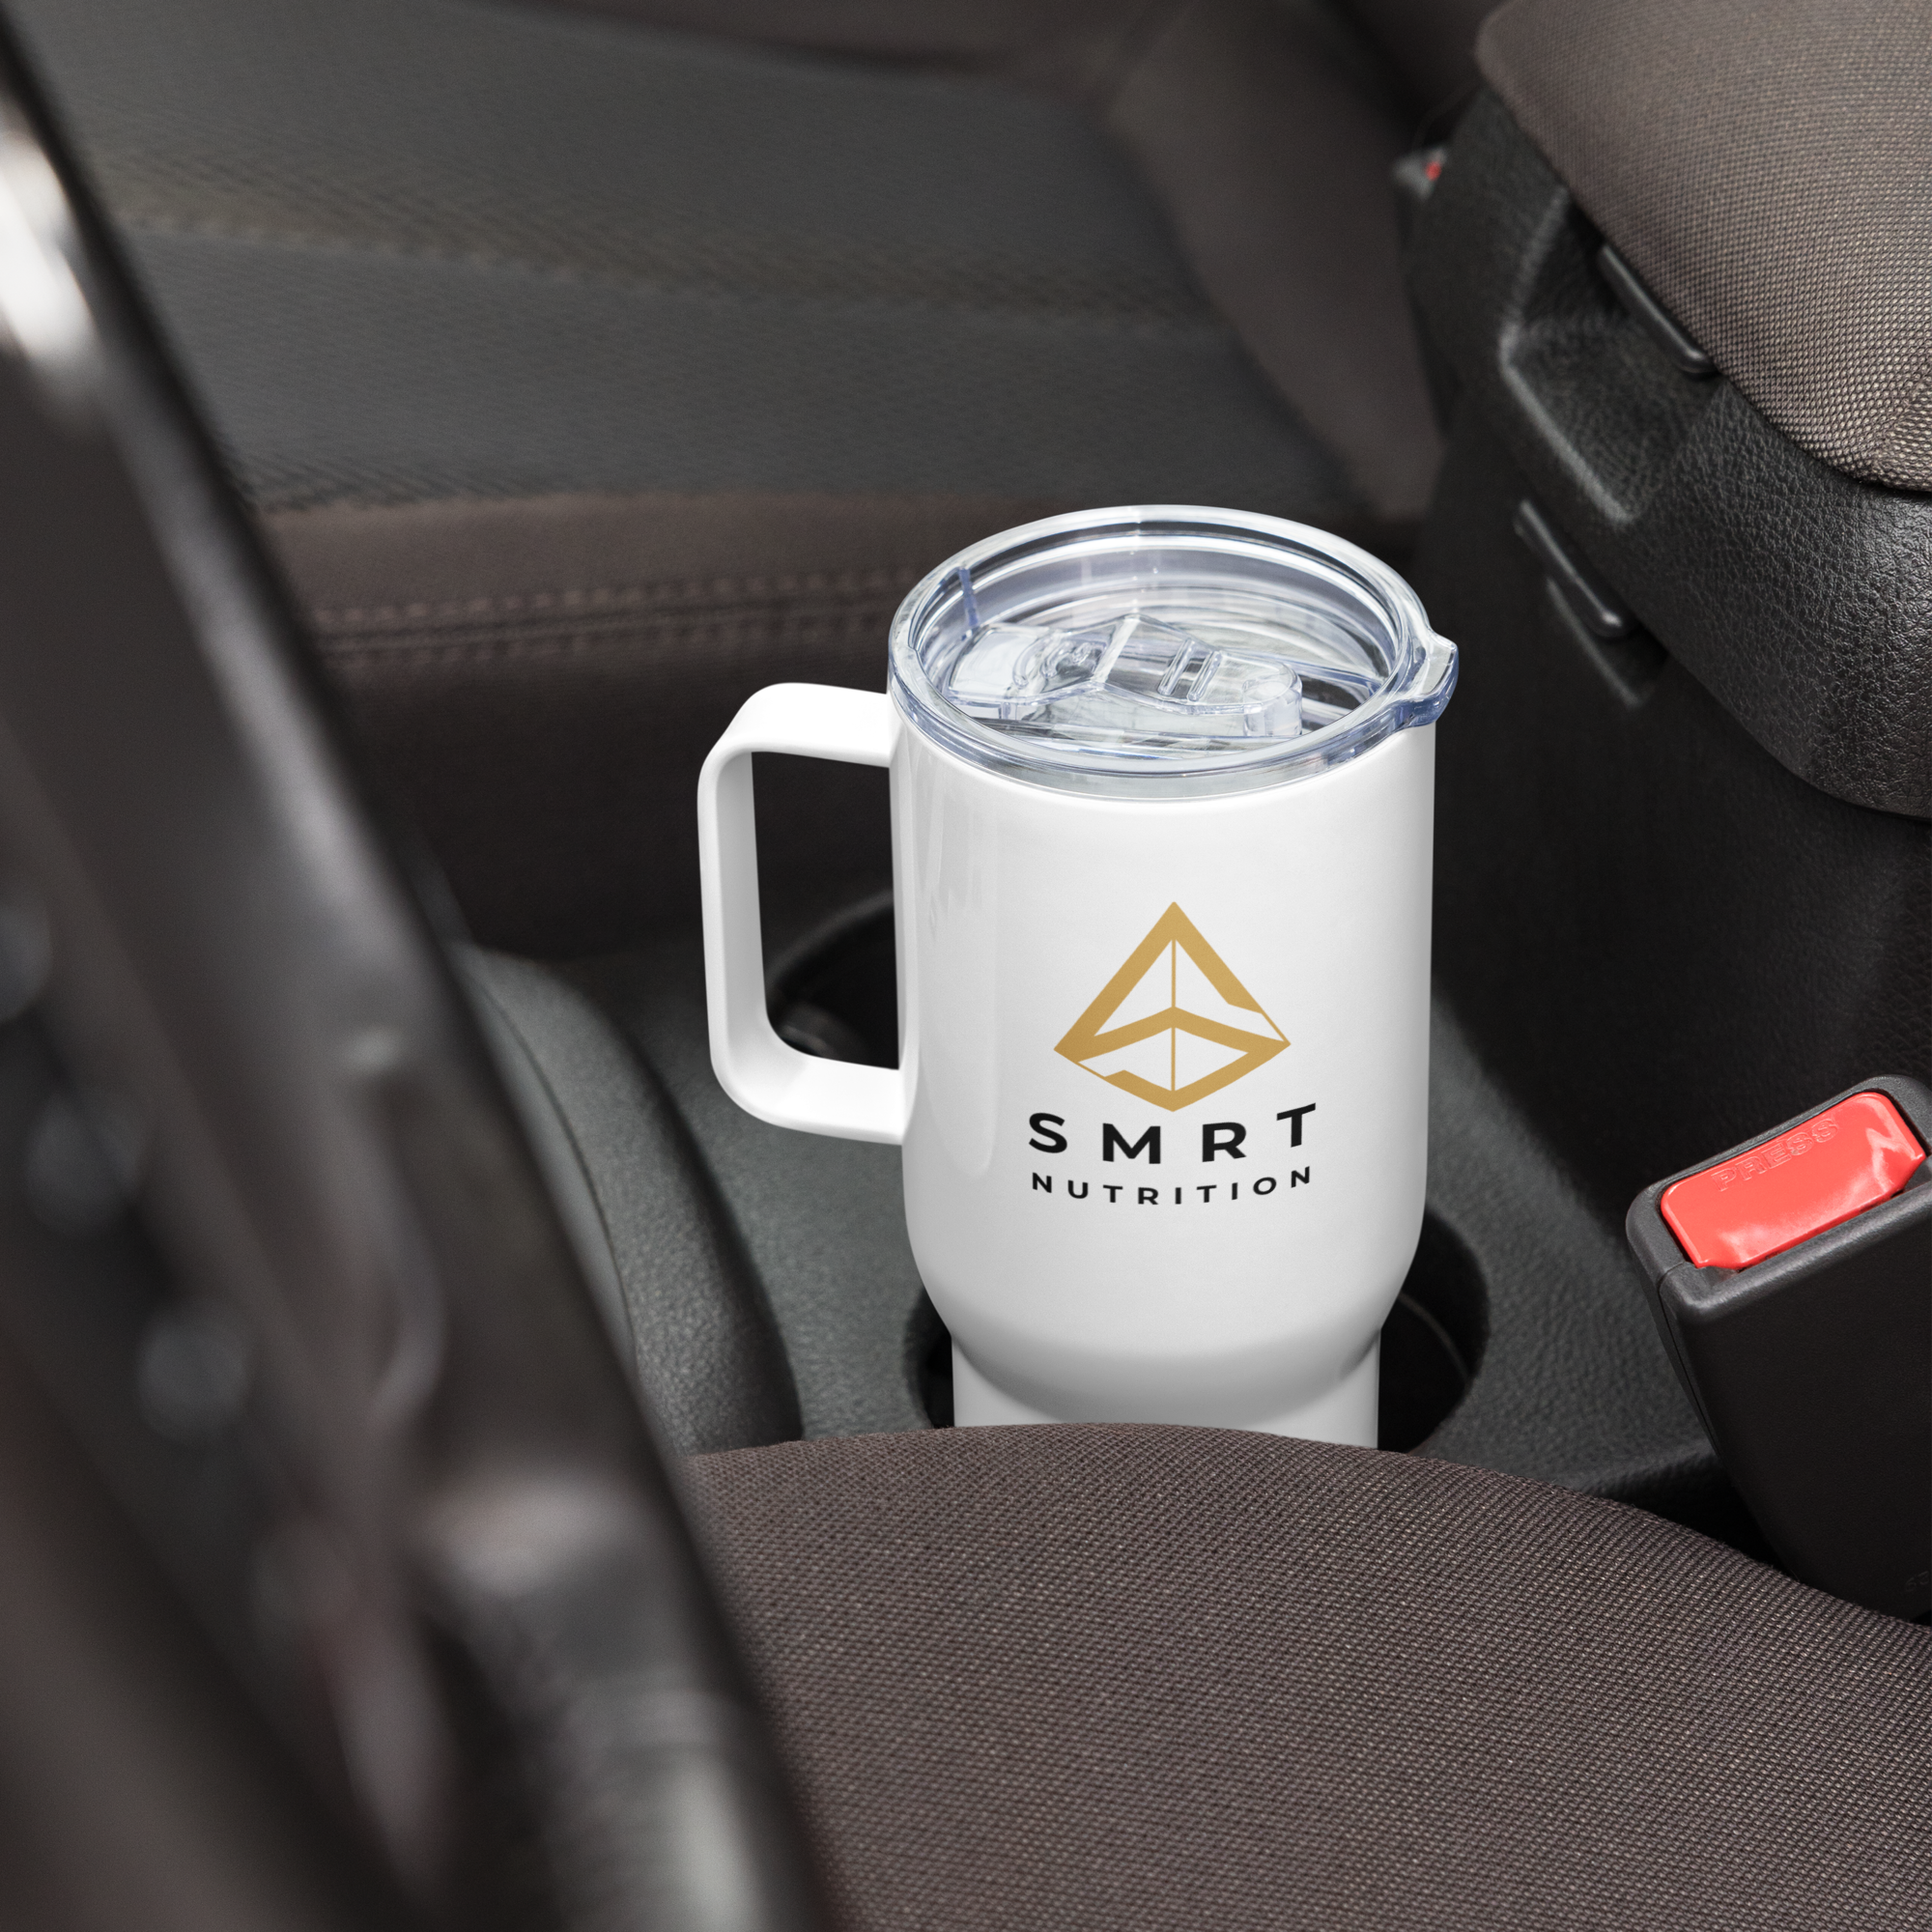 SMRT Nutrition Travel mug with a handle